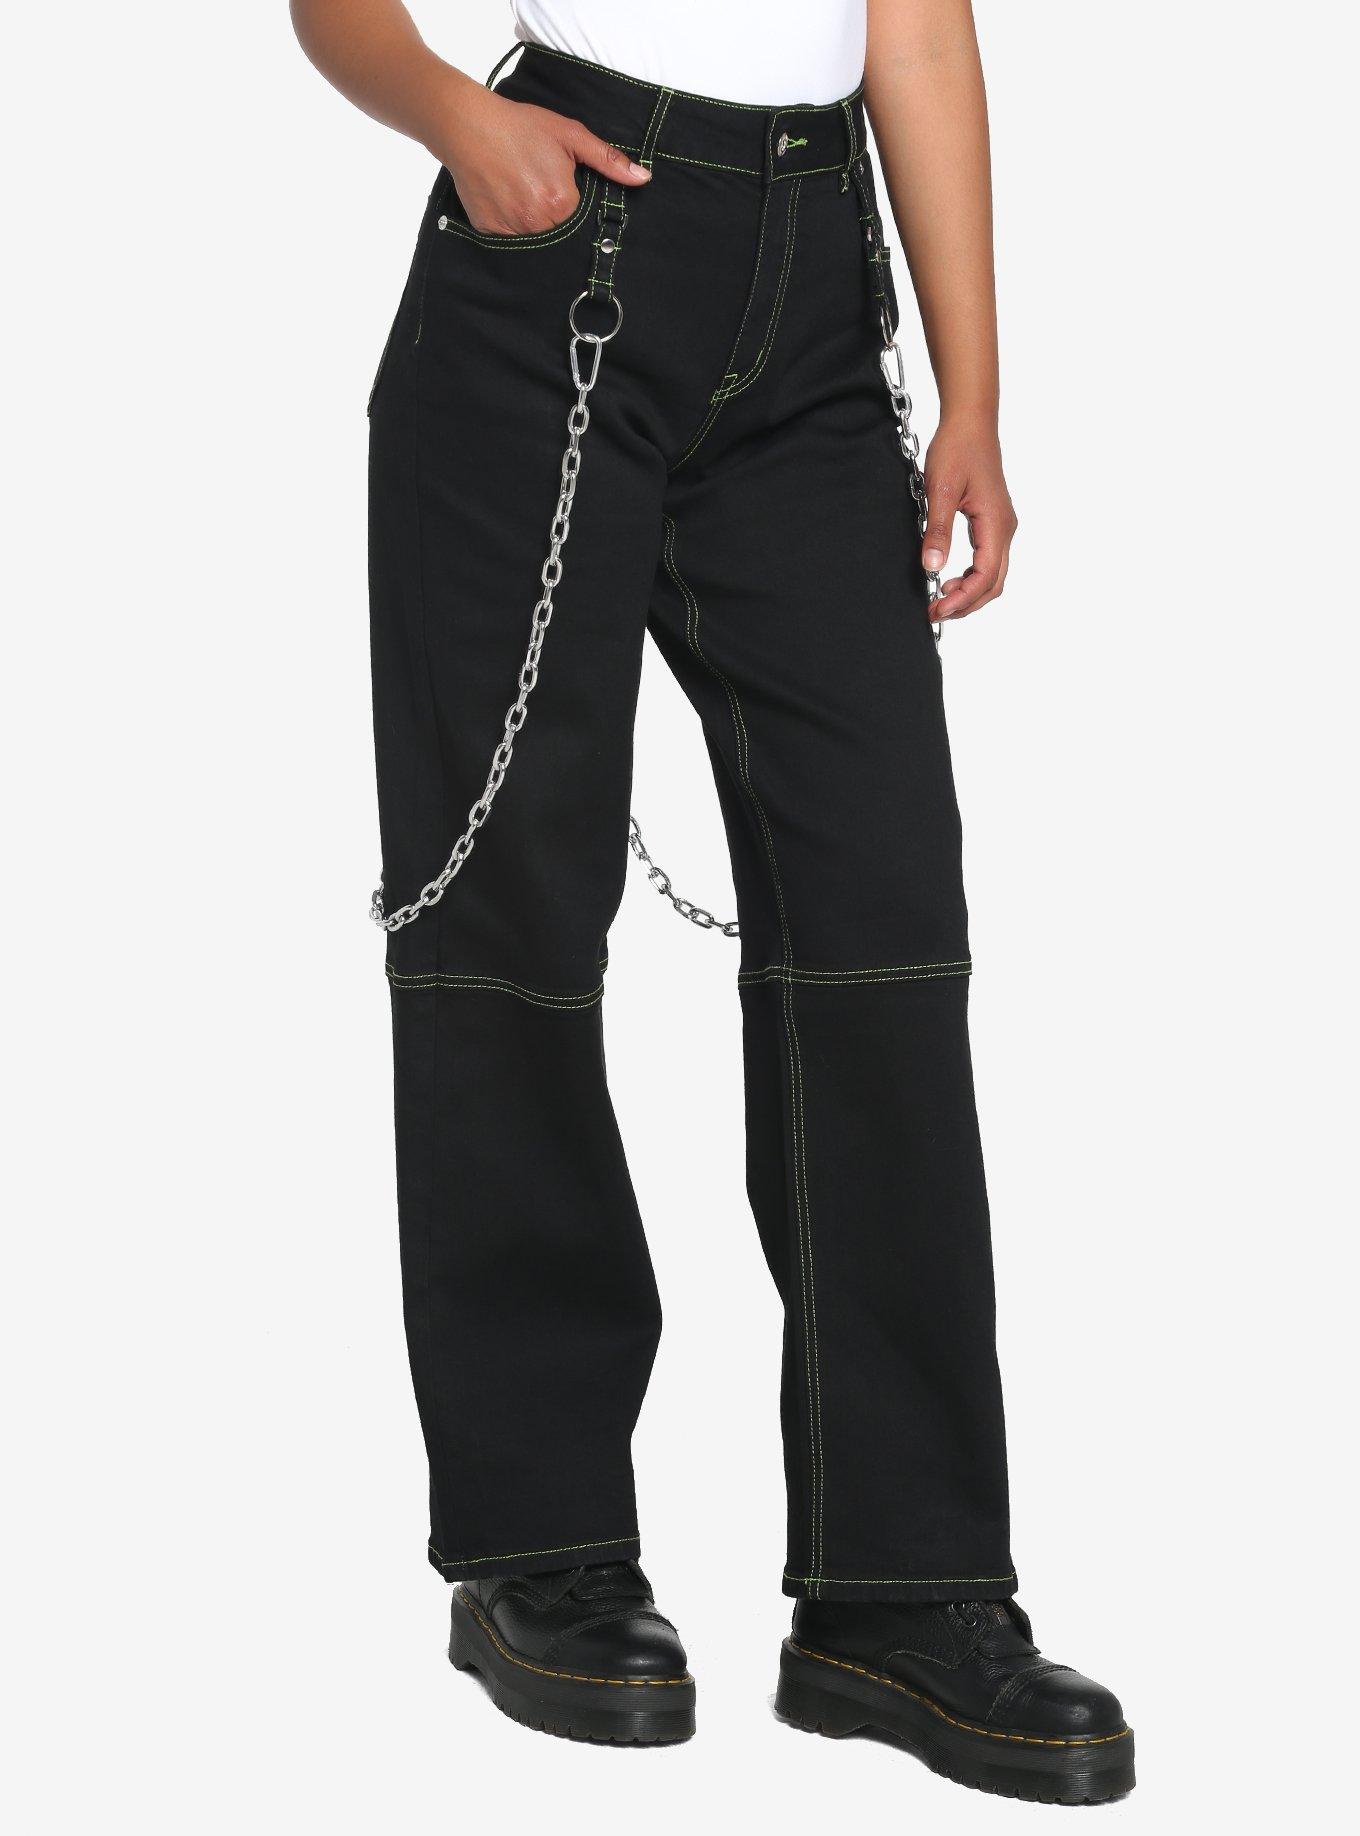 Black & Green Contrast Stitch Carpenter Pants With Detachable Chain